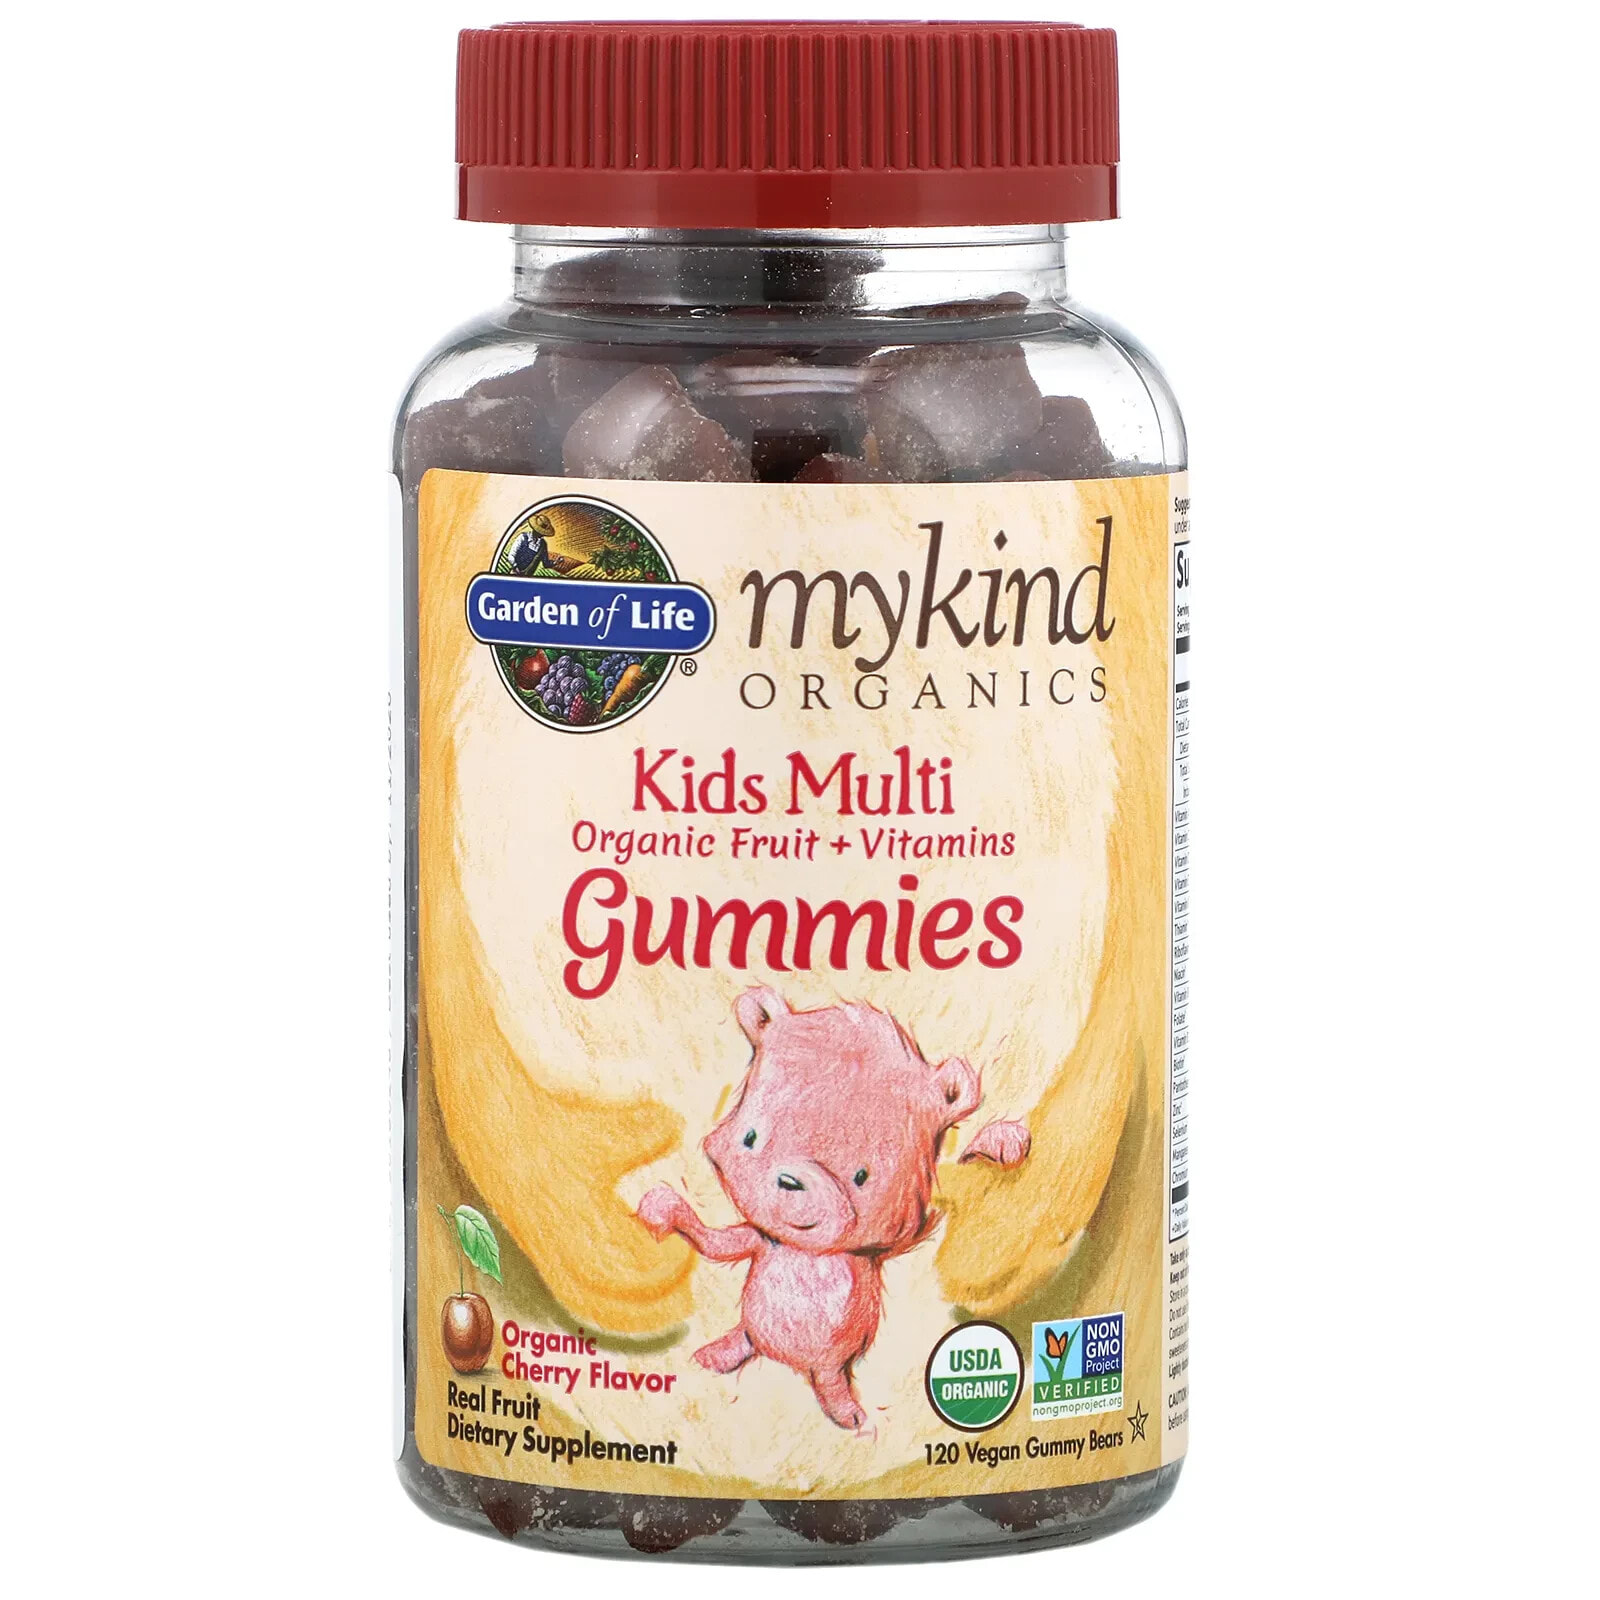 MyKind Organics, Kids Multi Gummy, Organic Cherry, 120 Vegan Gummy Bears